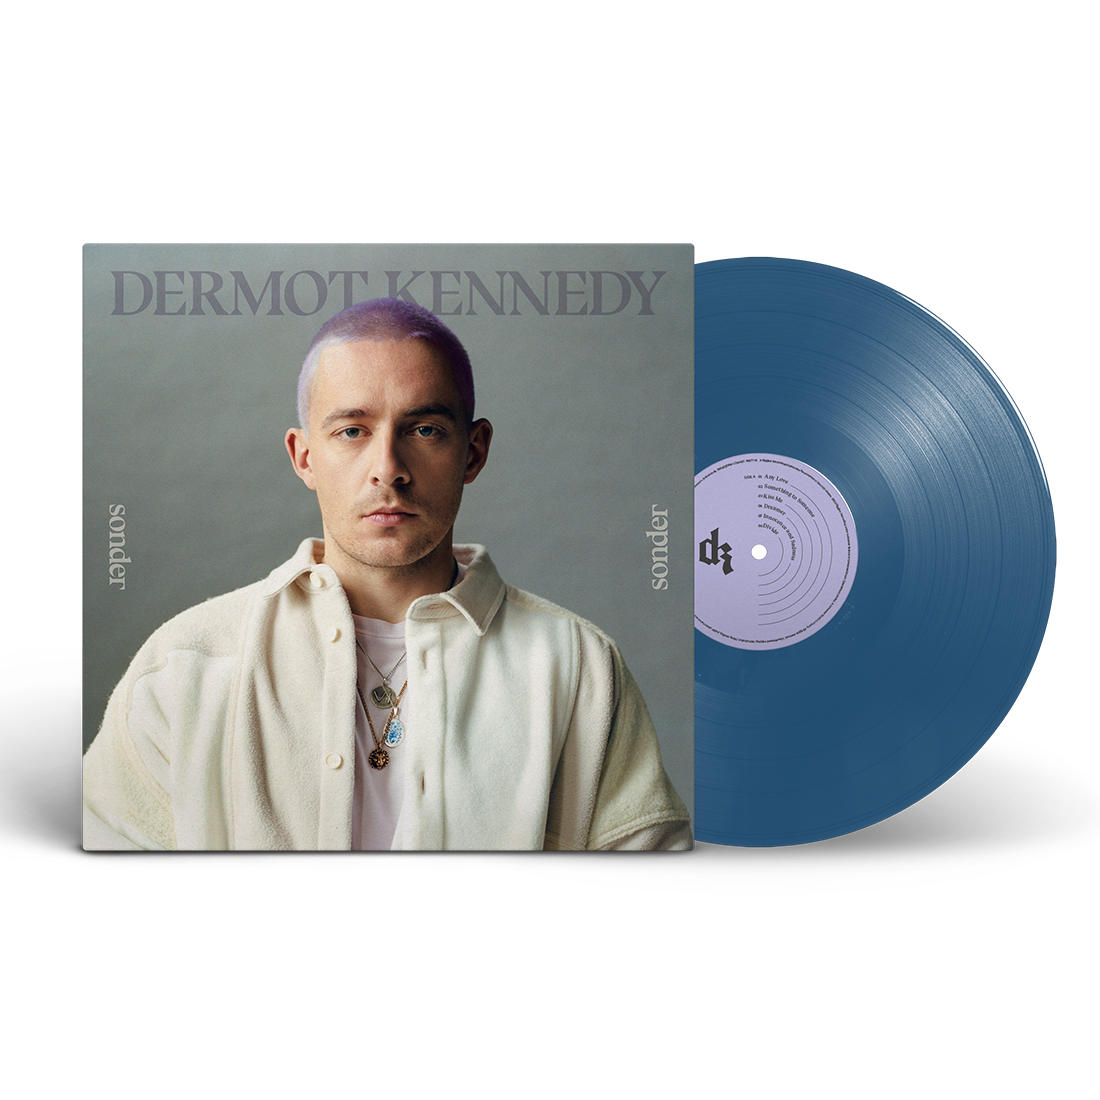 Dermot Kennedy - Sonder: Limited Aqua Blue Vinyl LP